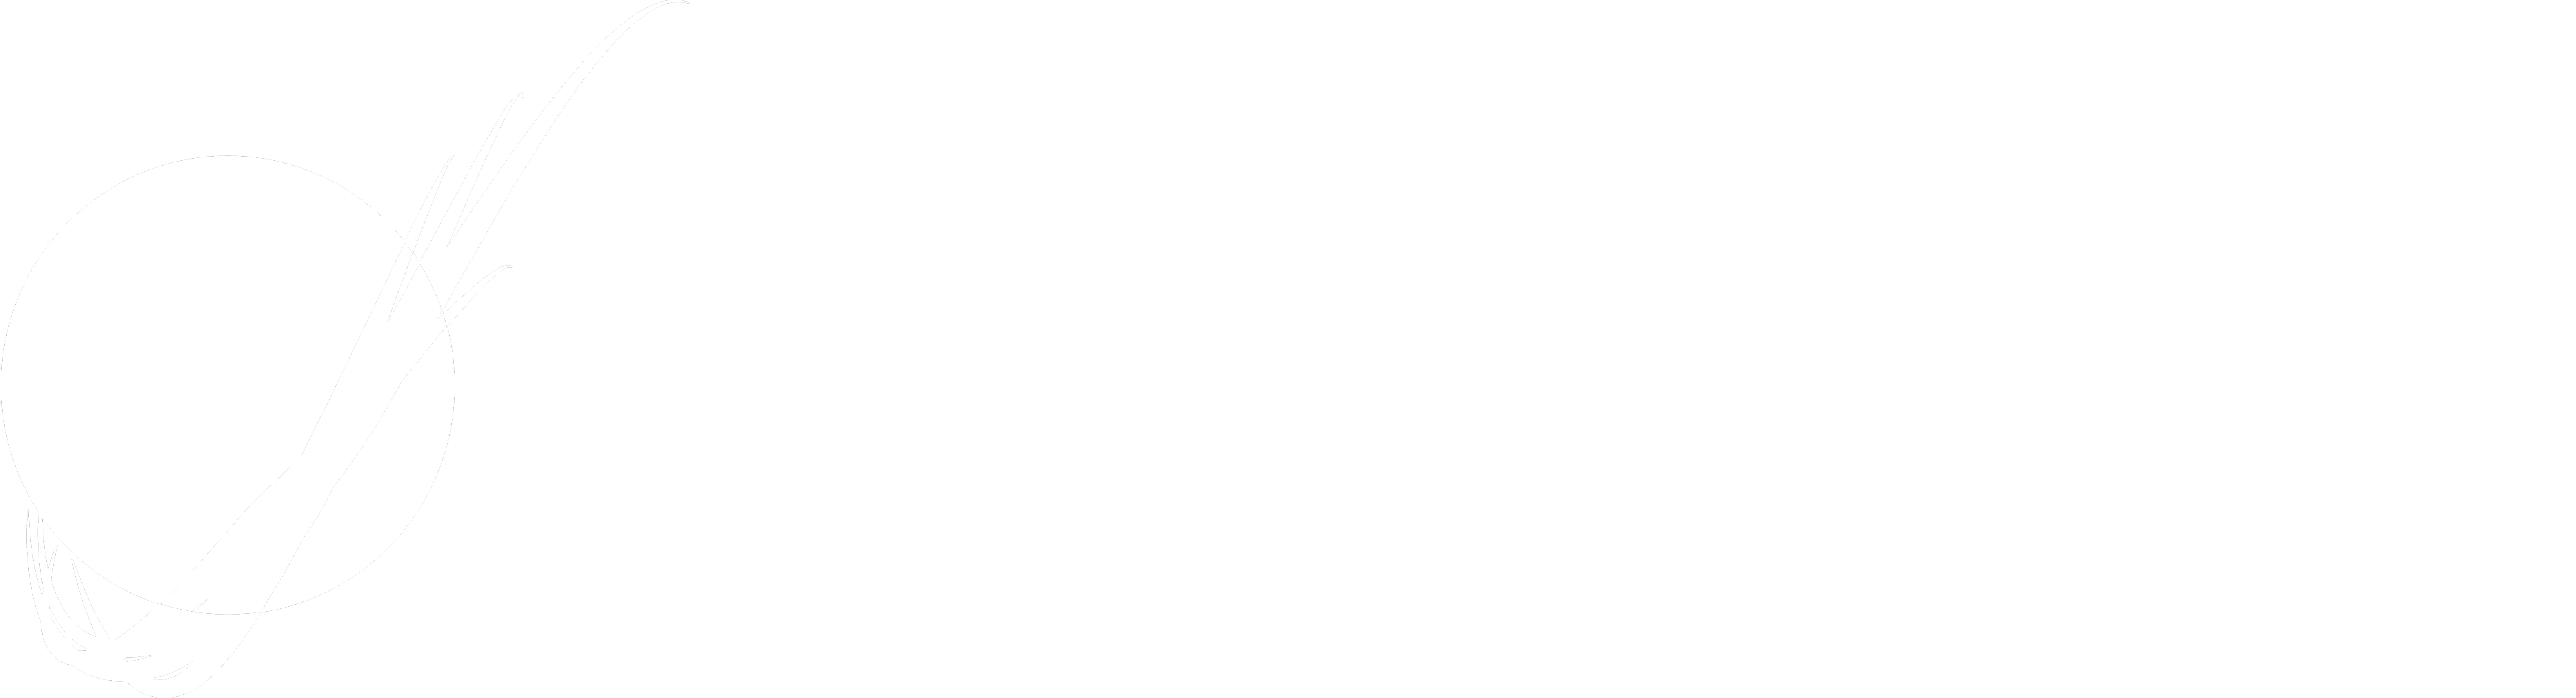 Mars Rover Logo - Mars Rover Design Team